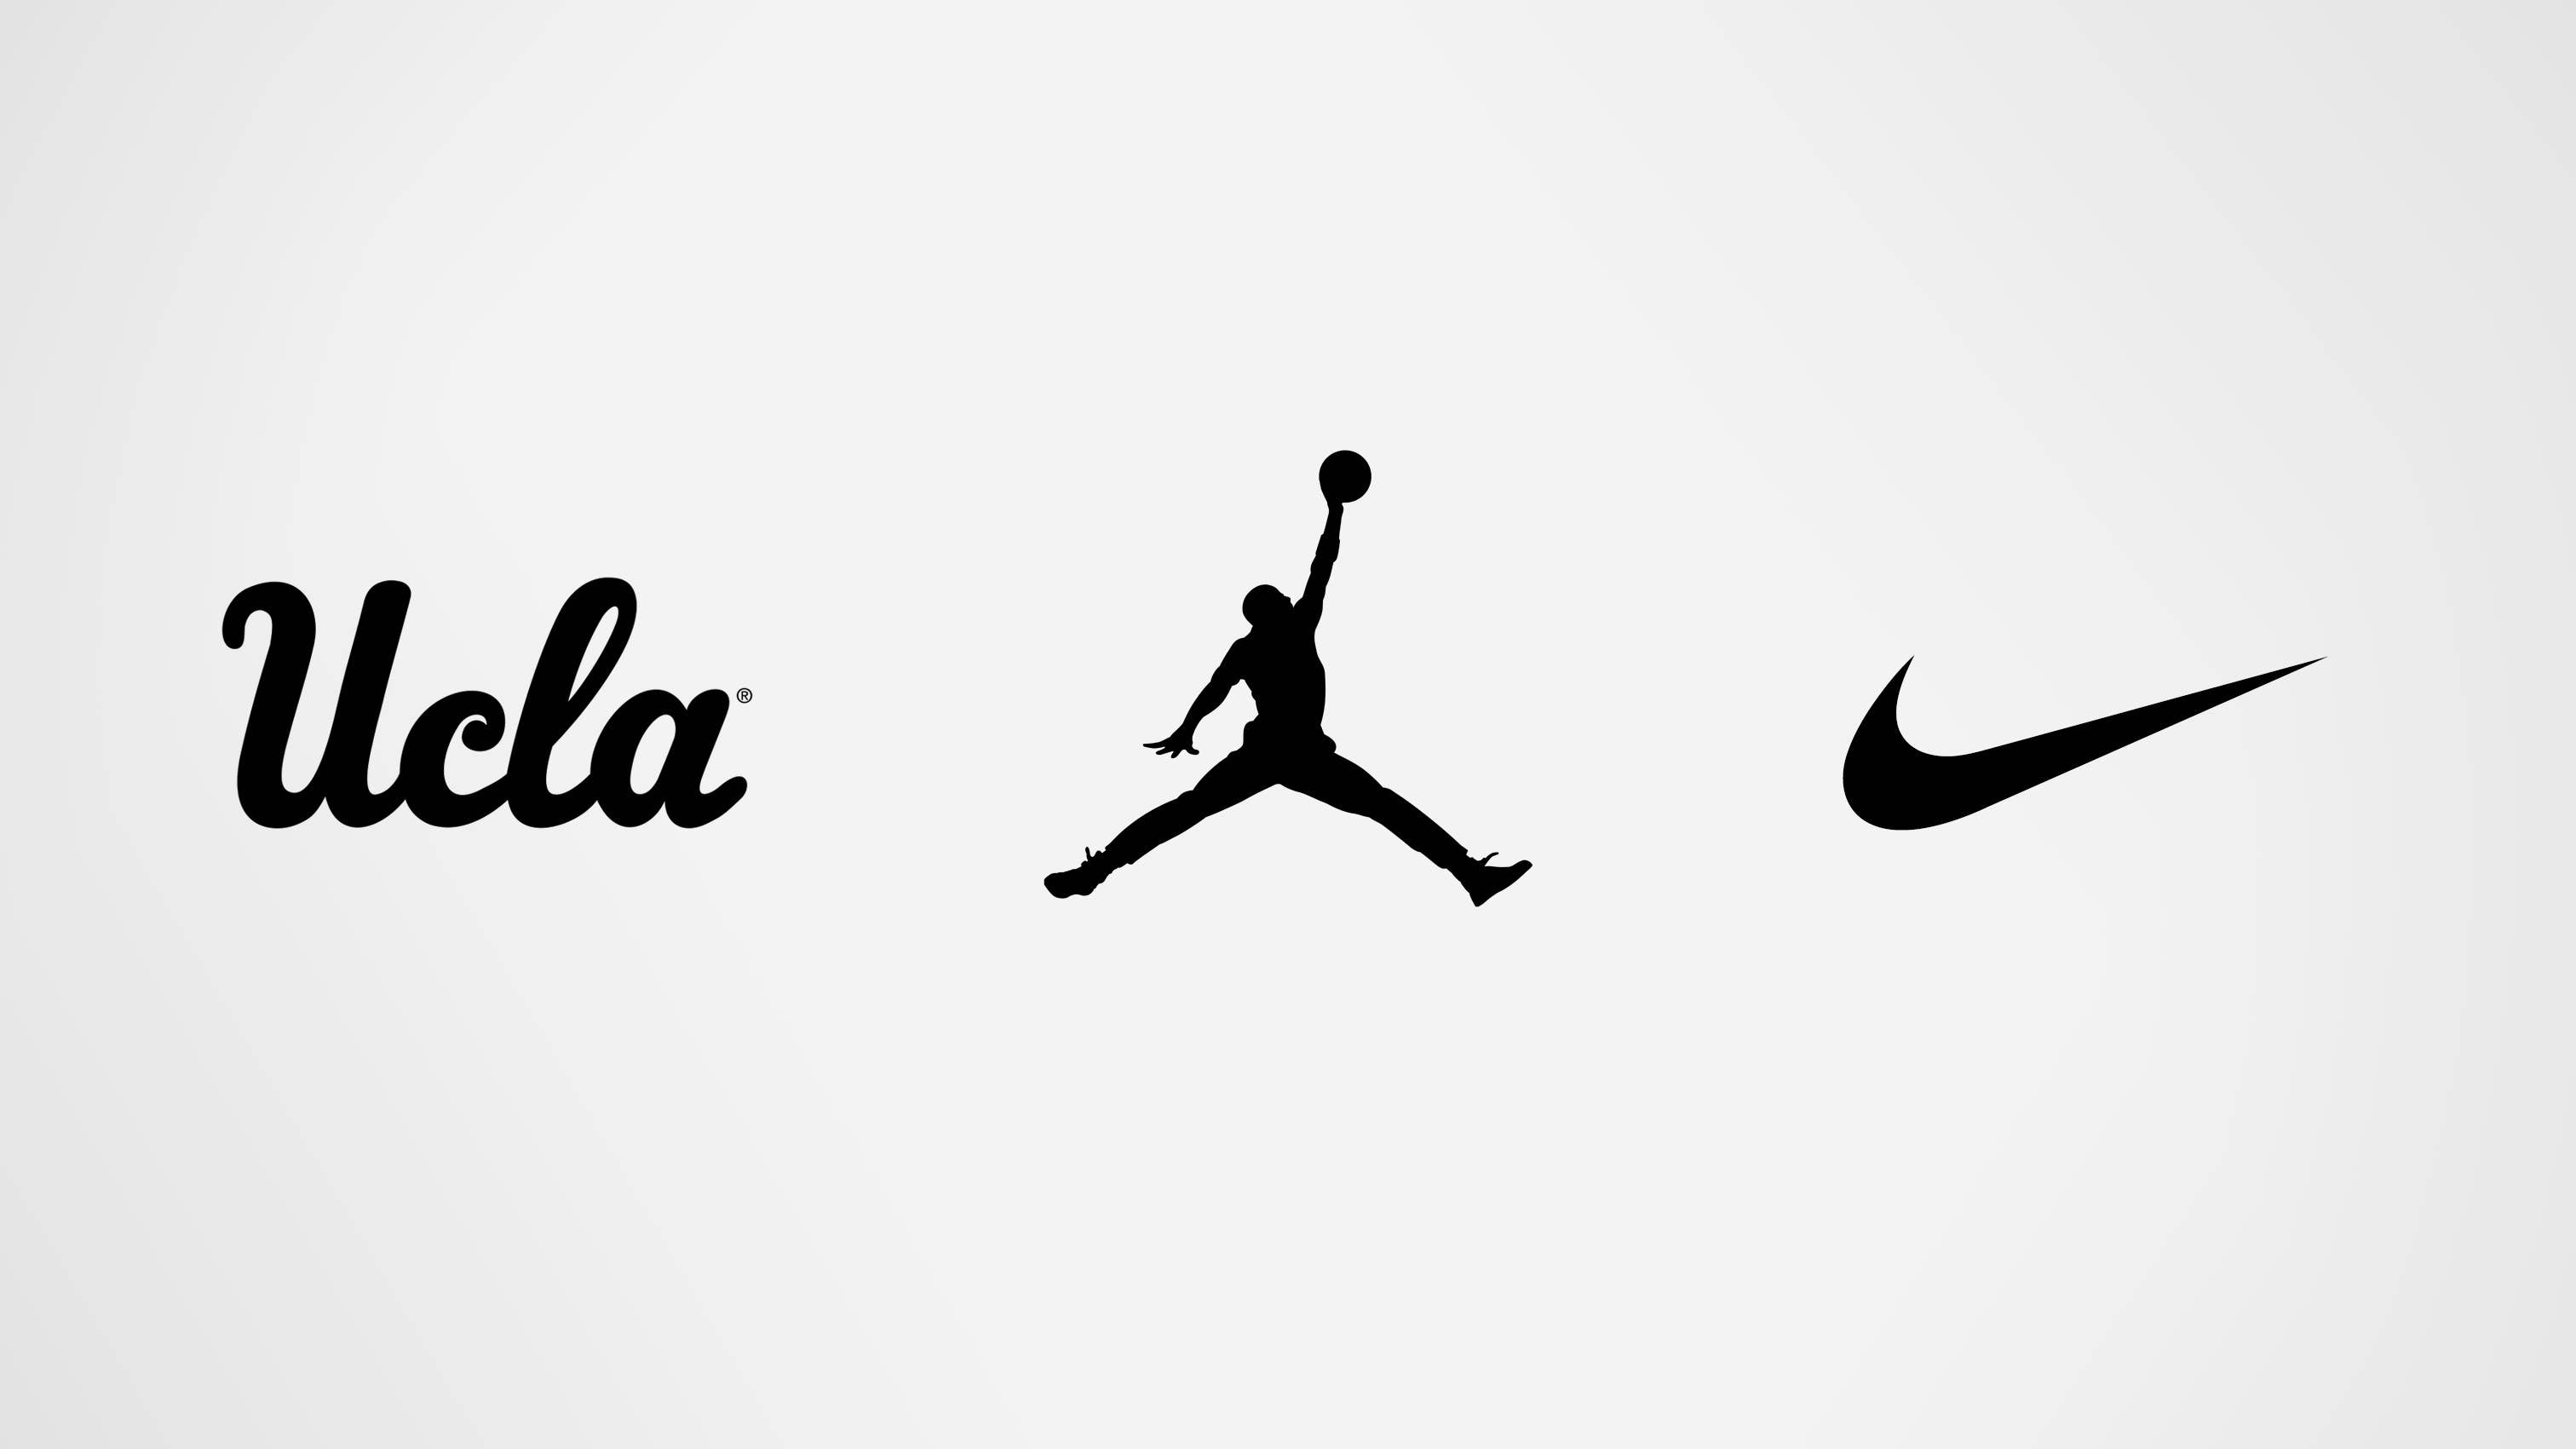 UCLA Jordan Brand Nike Logos